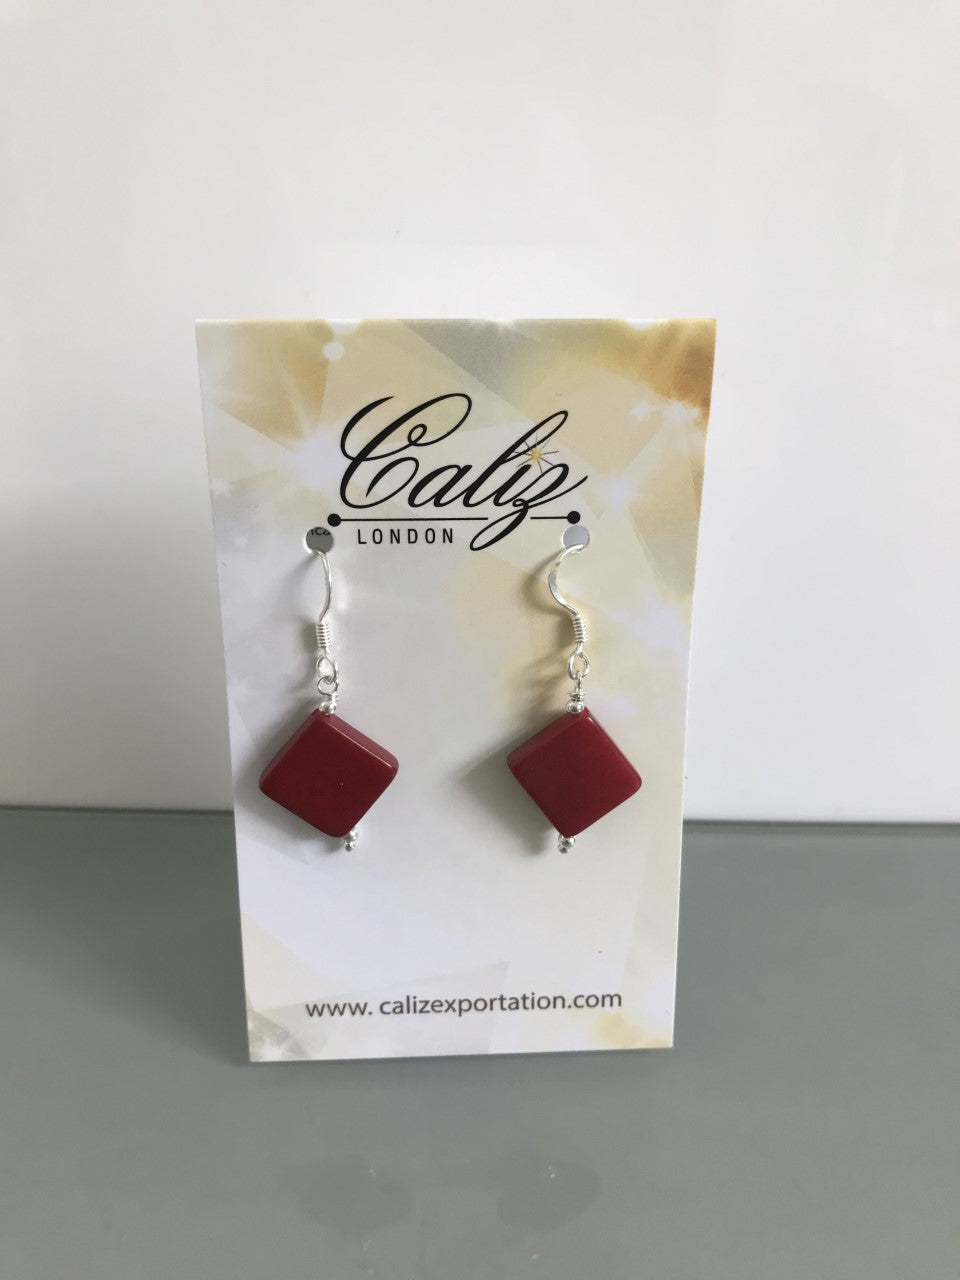 Diamantico earrings (11mm) - Red